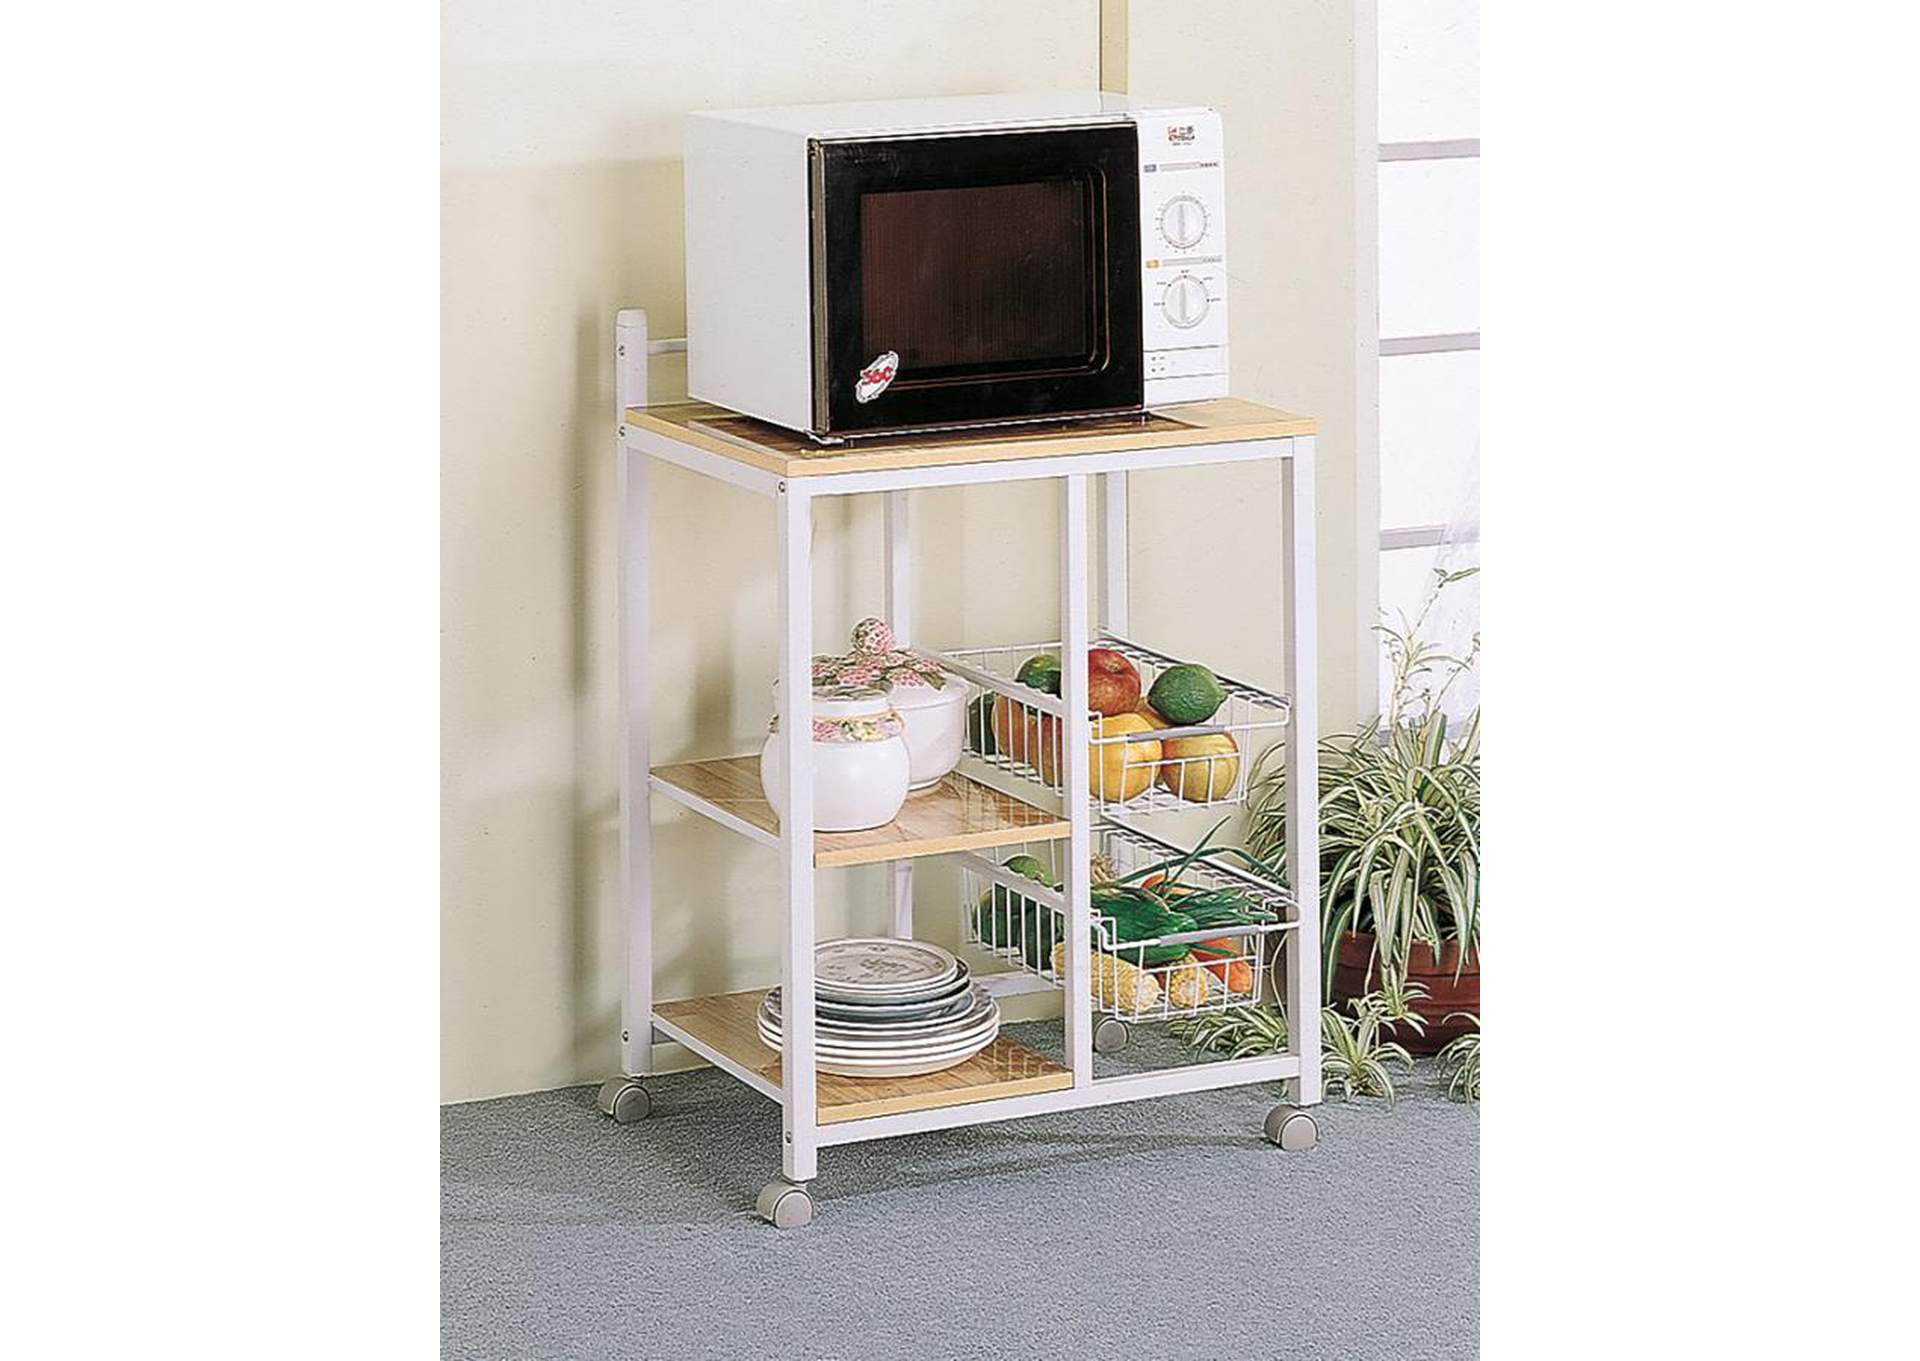 Kelvin 2-Shelf Kitchen Cart Natural Brown And White,Coaster Furniture